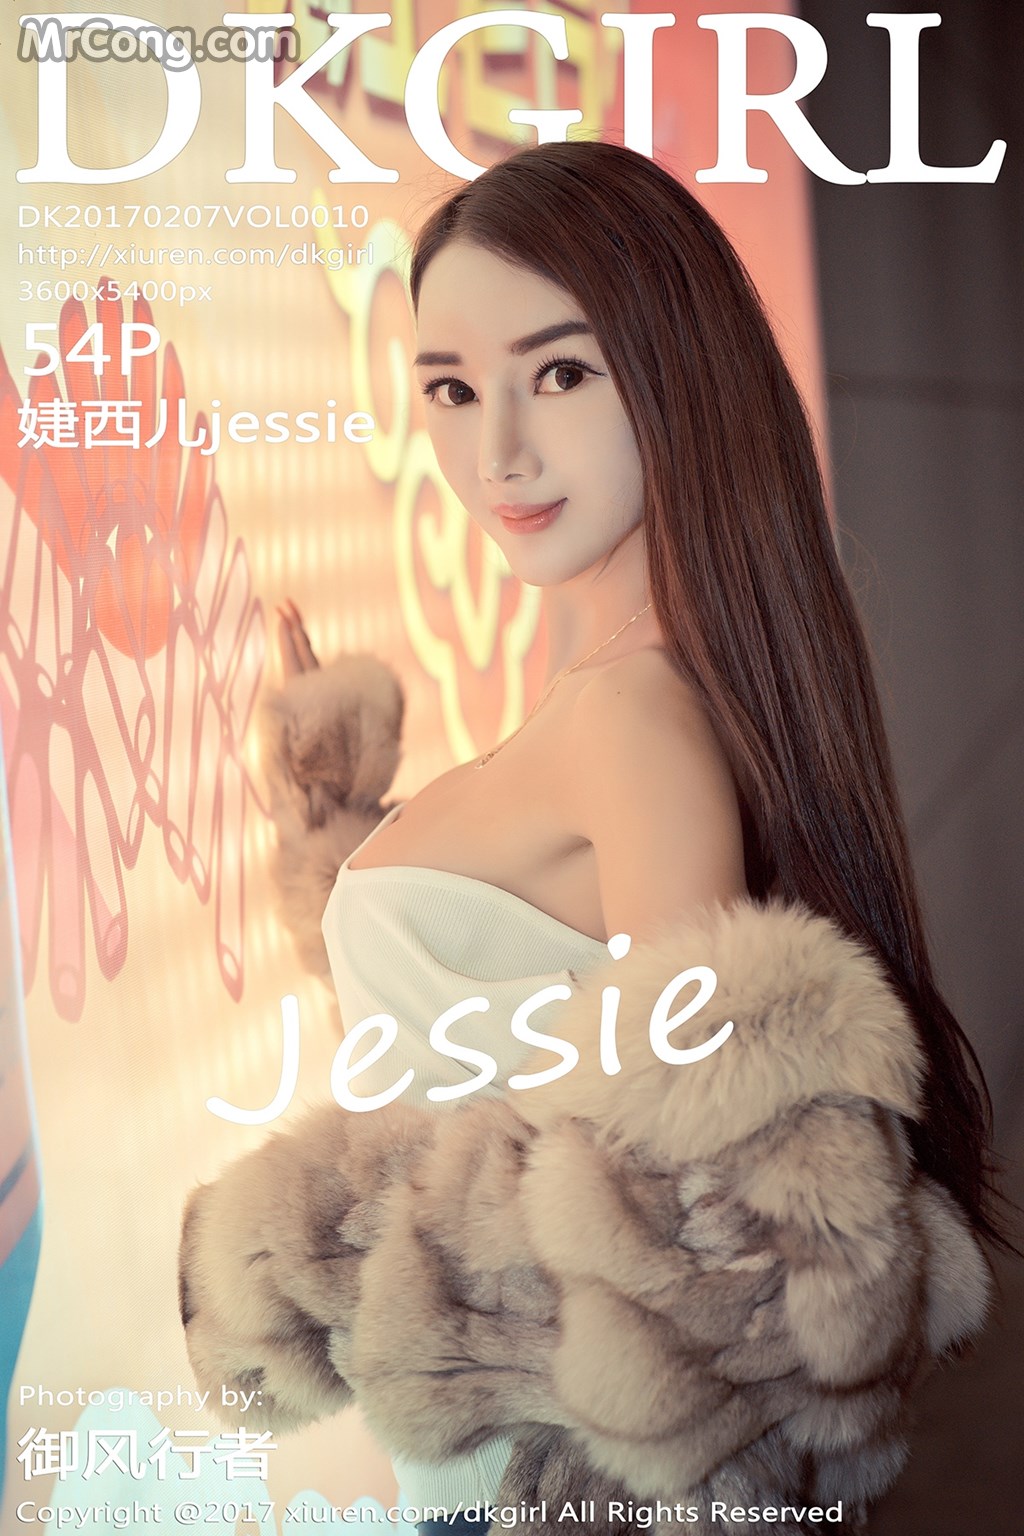 DKGirl Vol.010: Model Jessie (婕 西 儿) (55 photos) photo 1-0